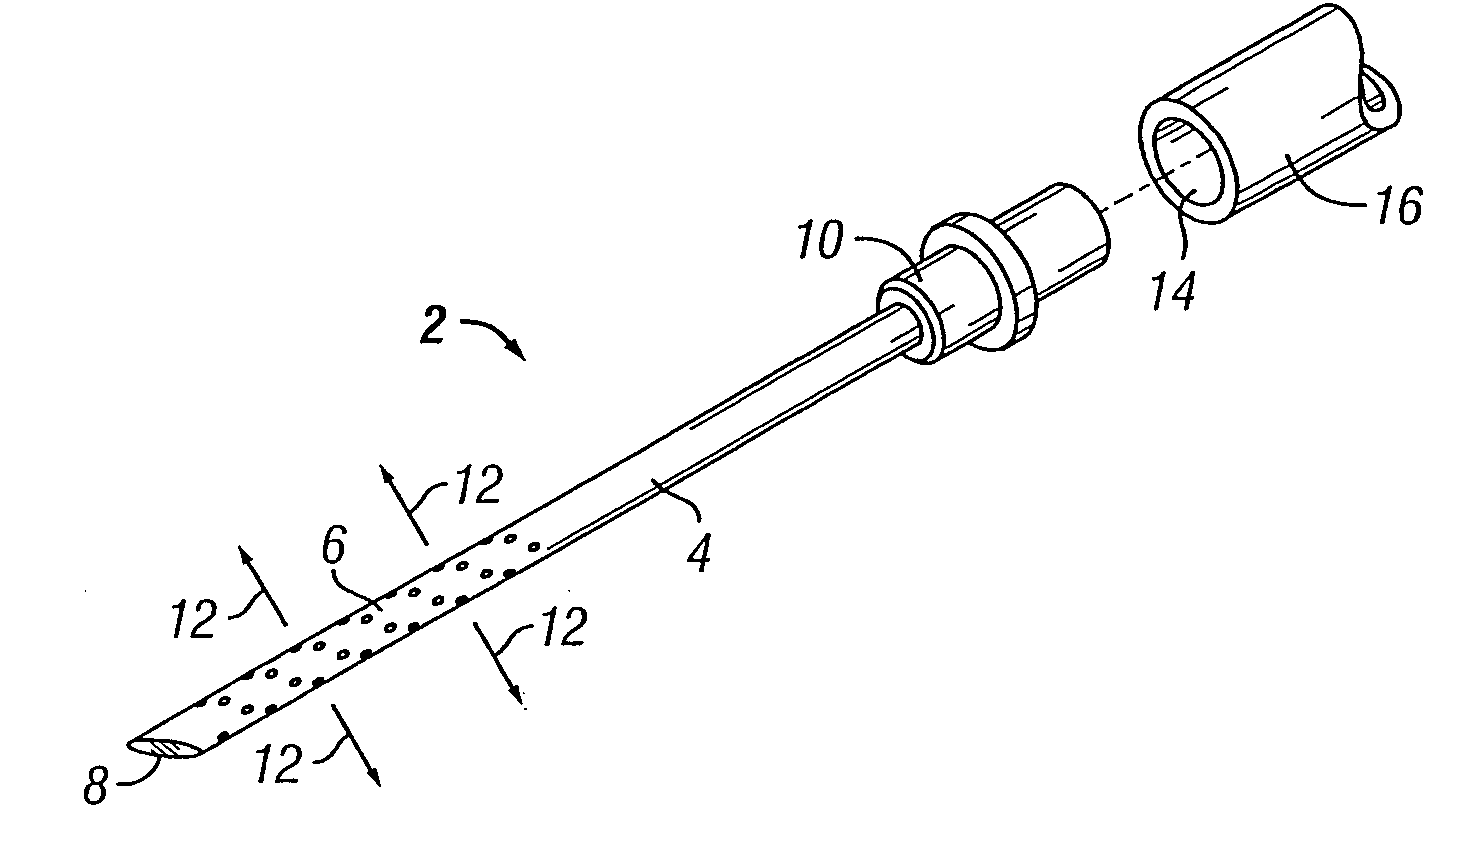 Syringe system